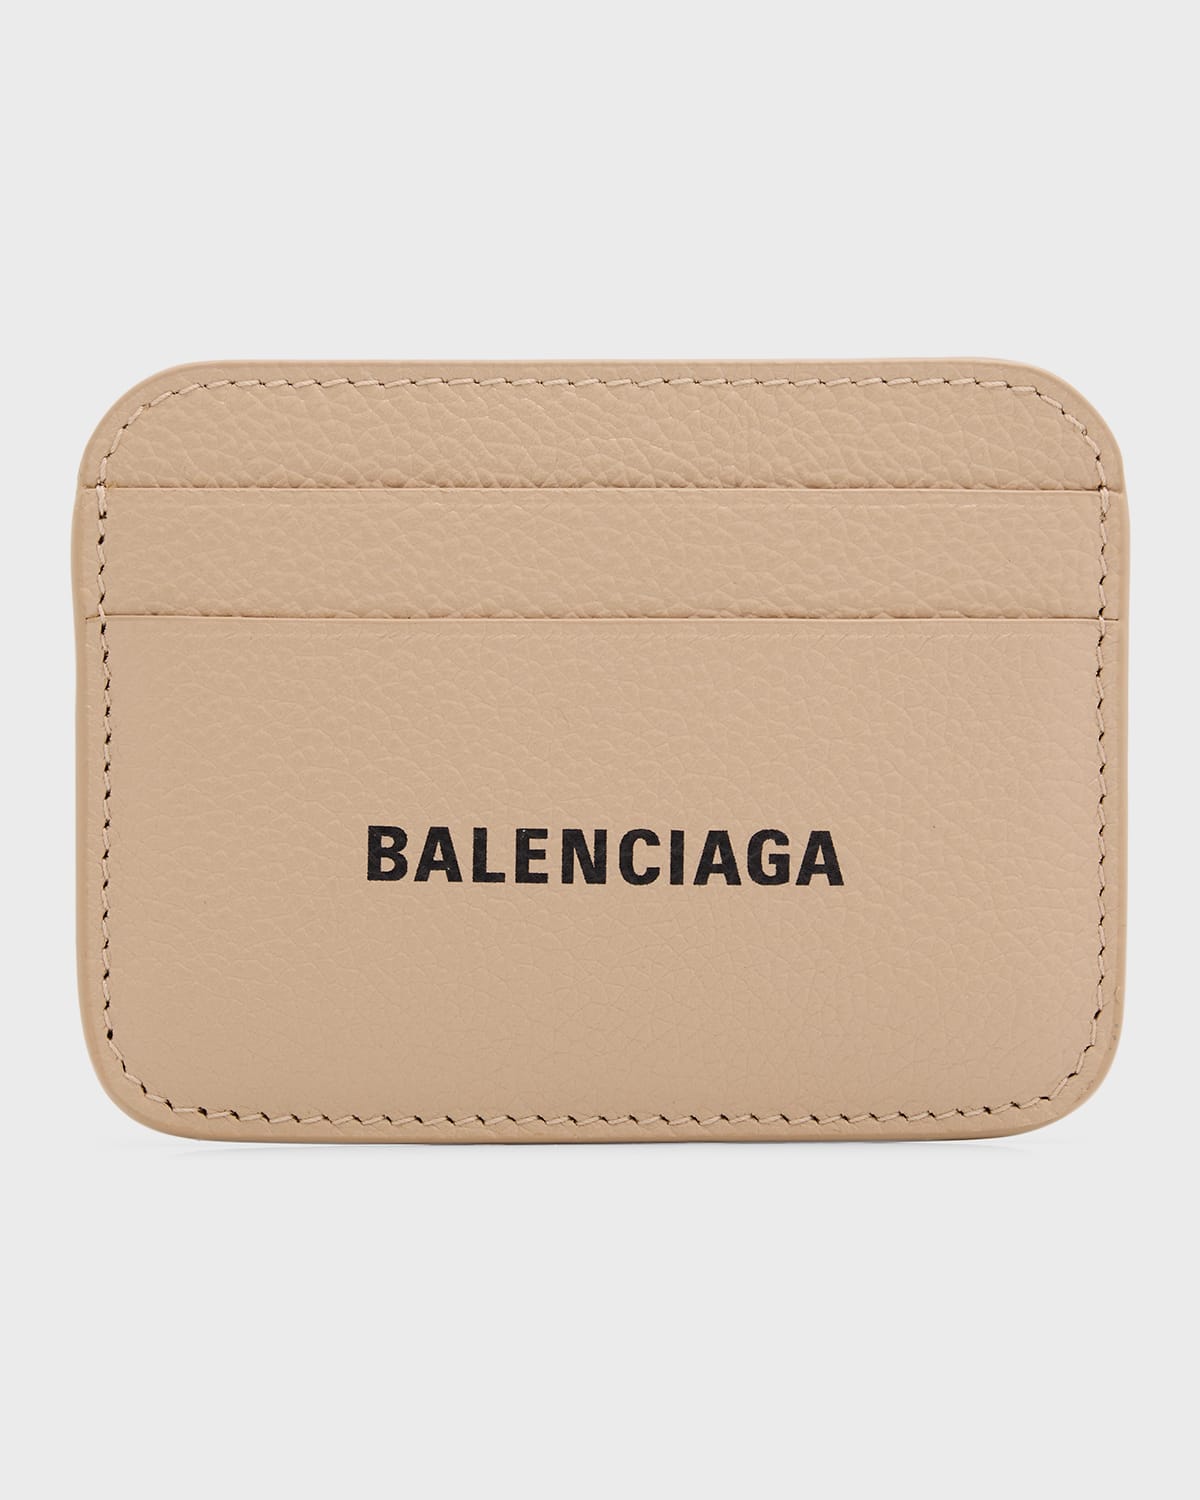 Balenciaga Cash Card Holder - Grained Calf In Warm Beige/black